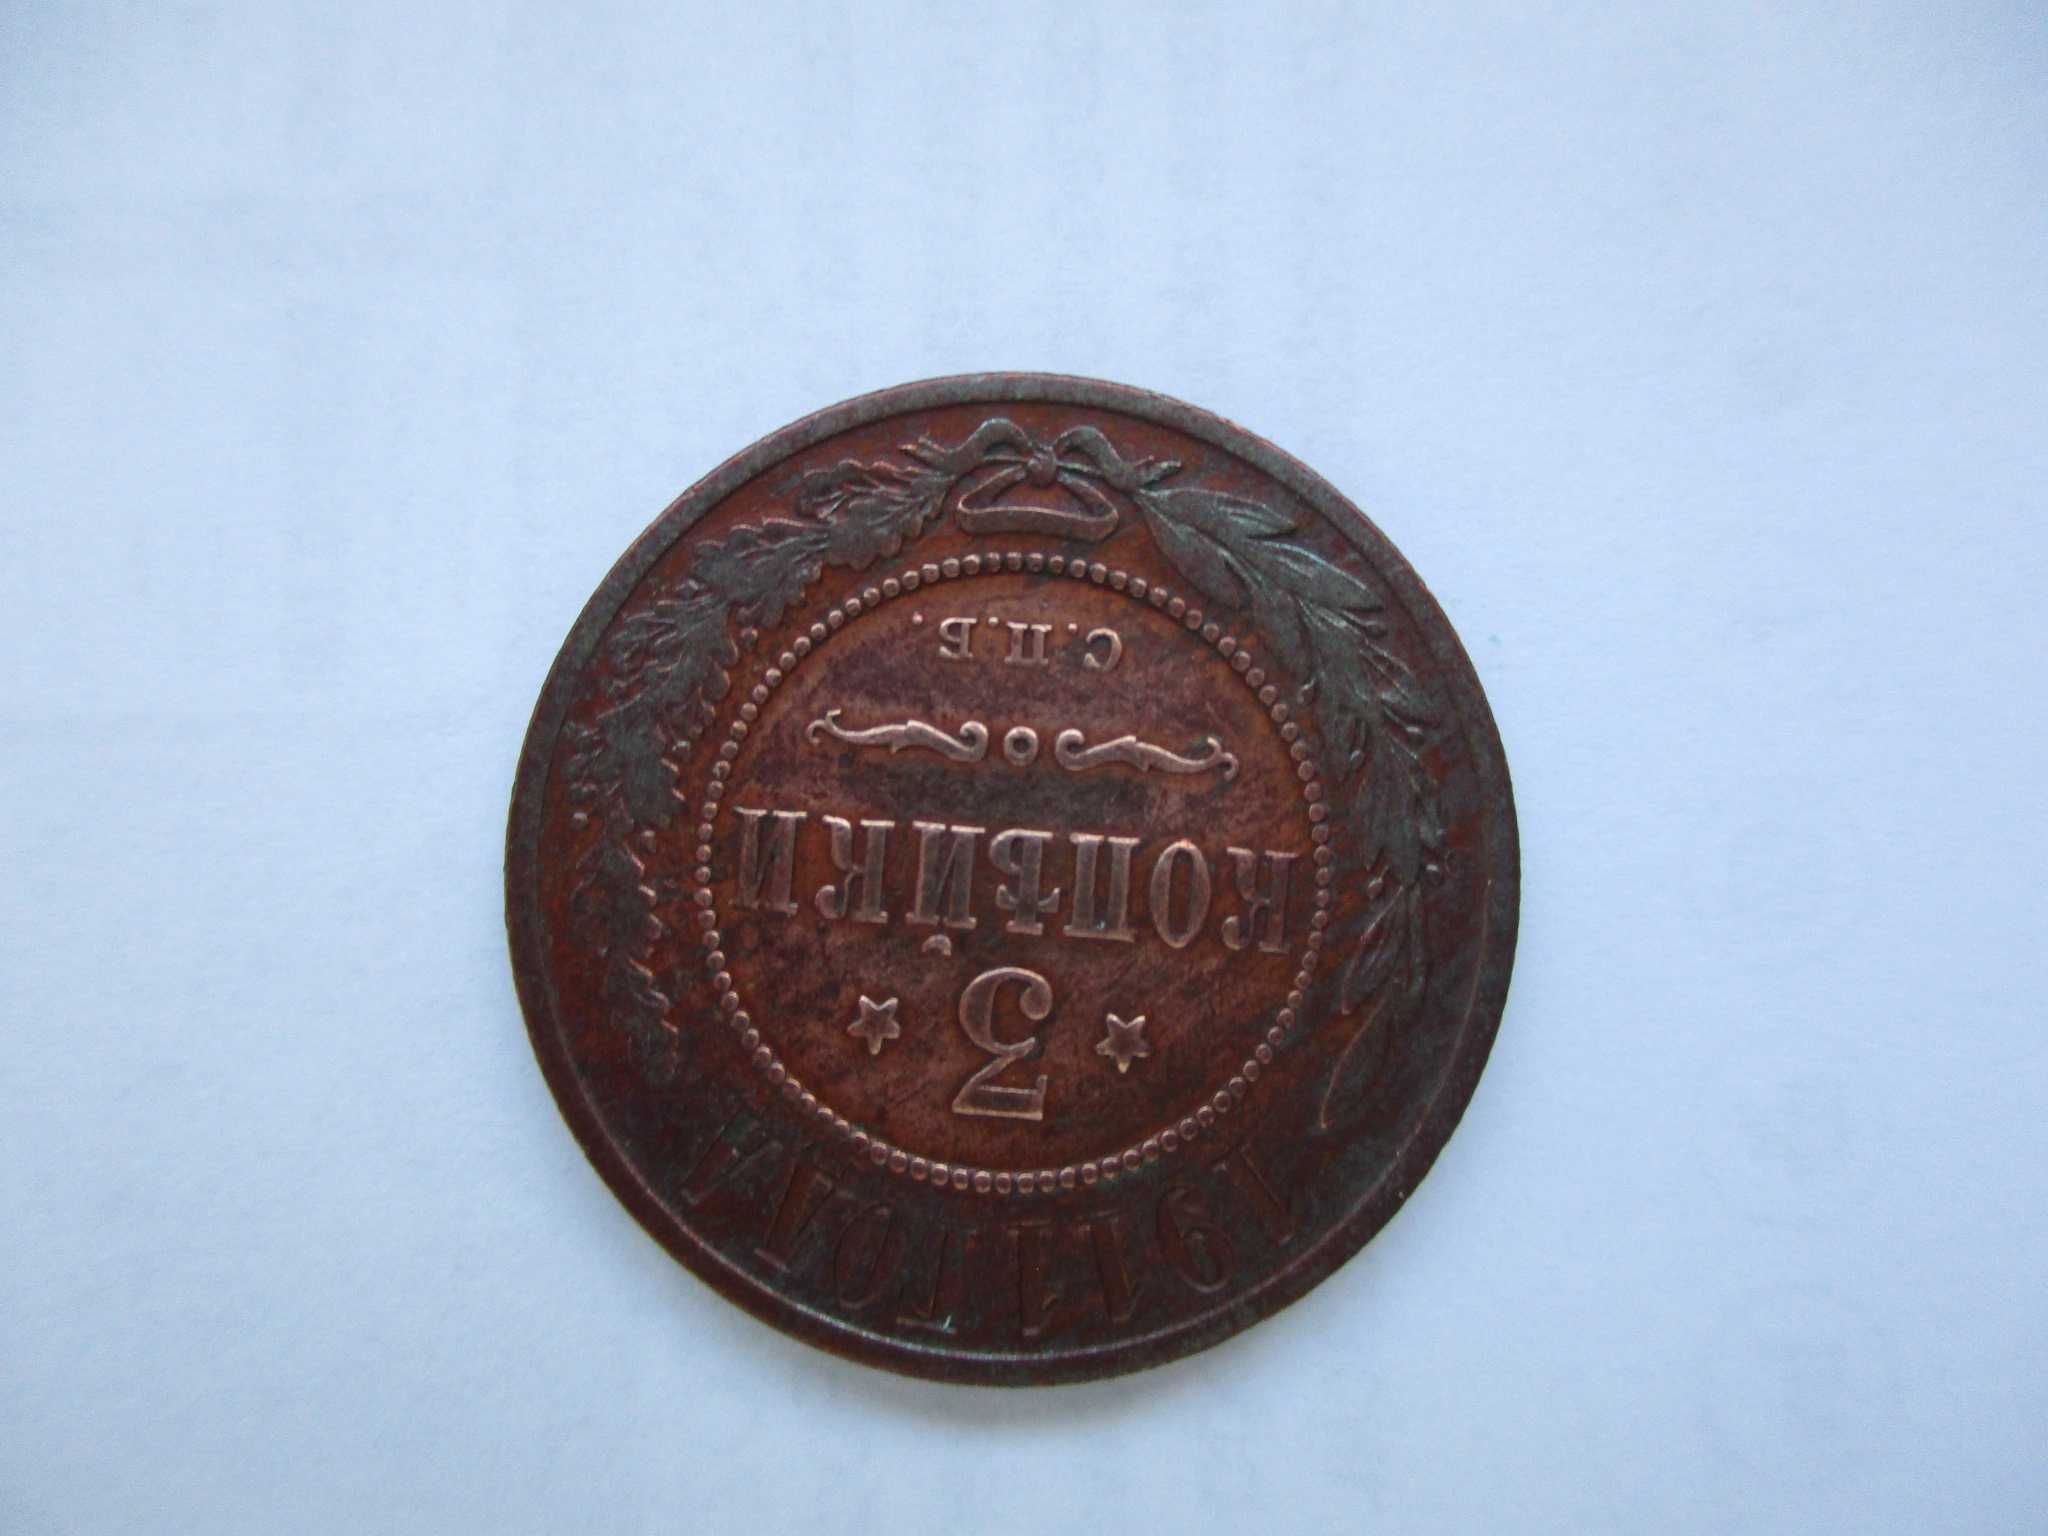 Moneta 3 kopiejki z 1911 r. Rosja